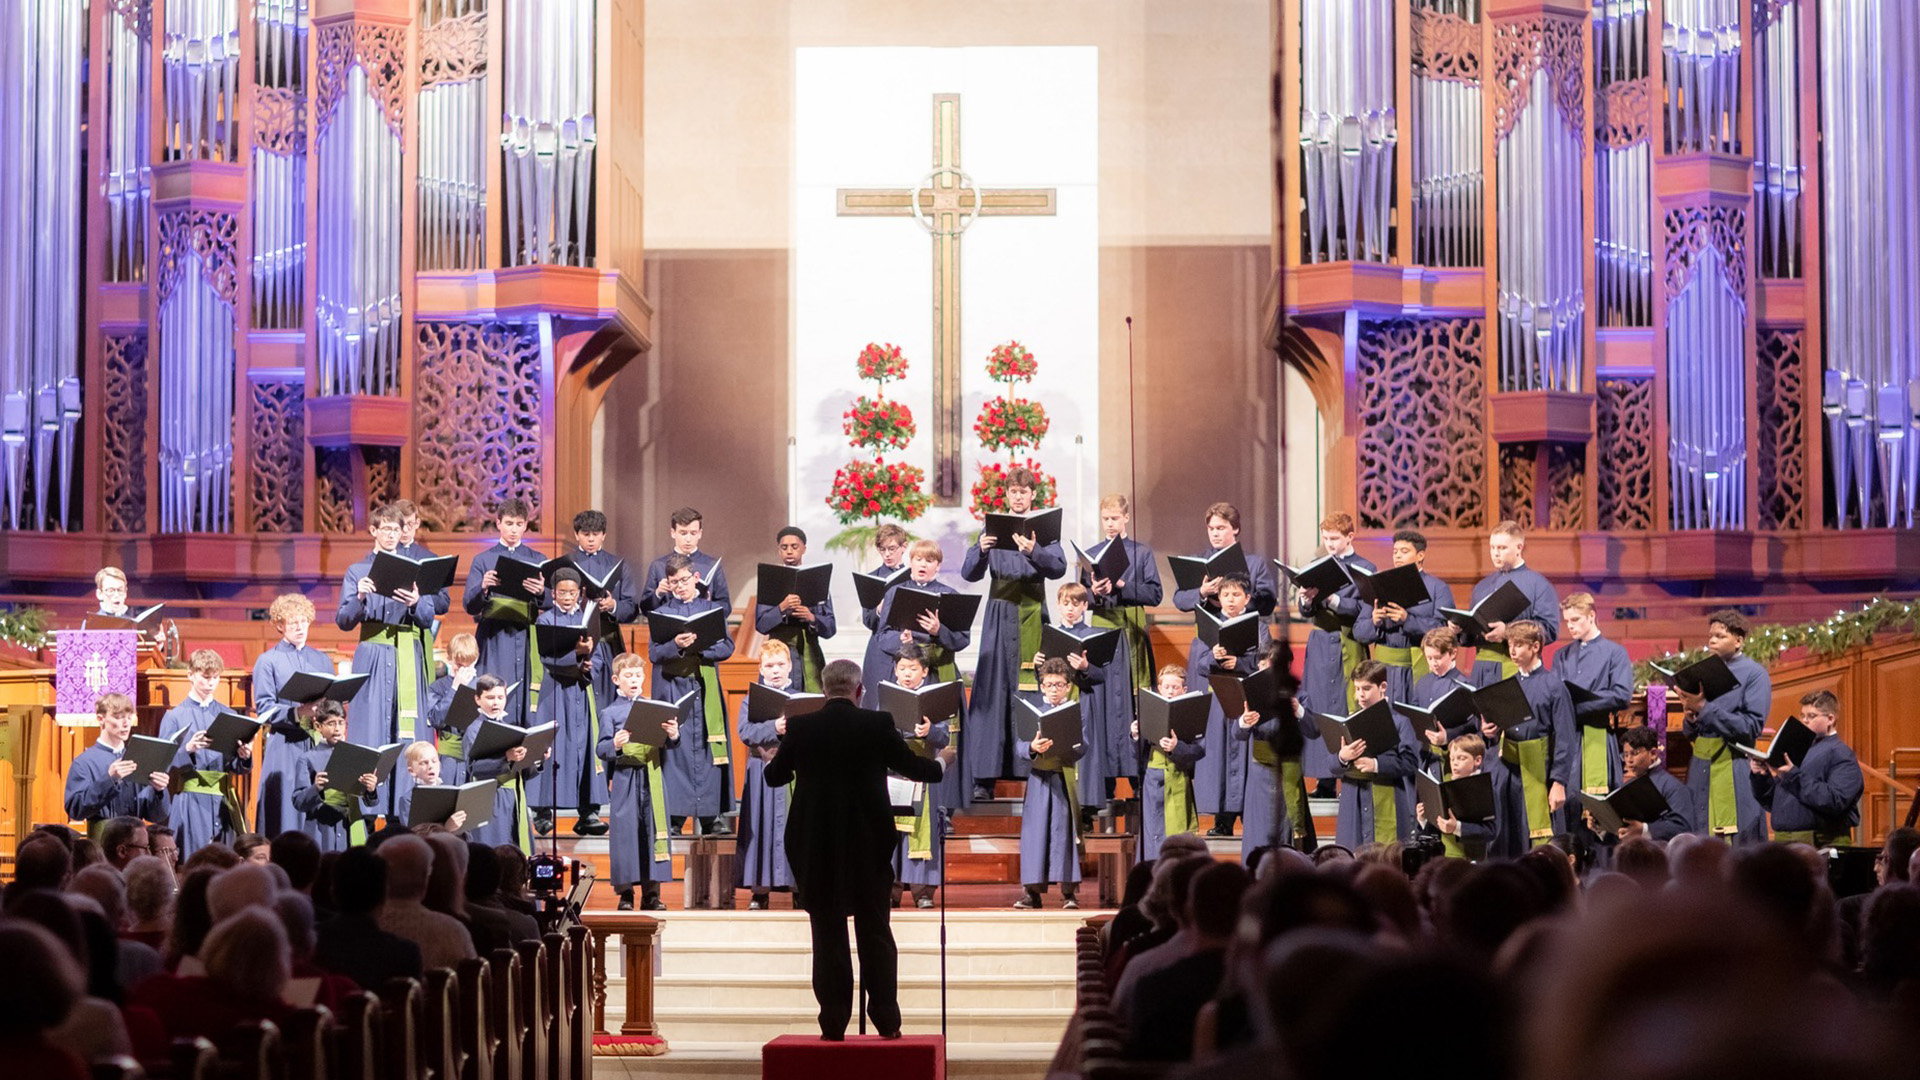 The Georgia Boy Choir performs their Christmas Concert at Peachtree Road United Methodist Church in Atlanta, Georgia as part of our Music Concert Series.